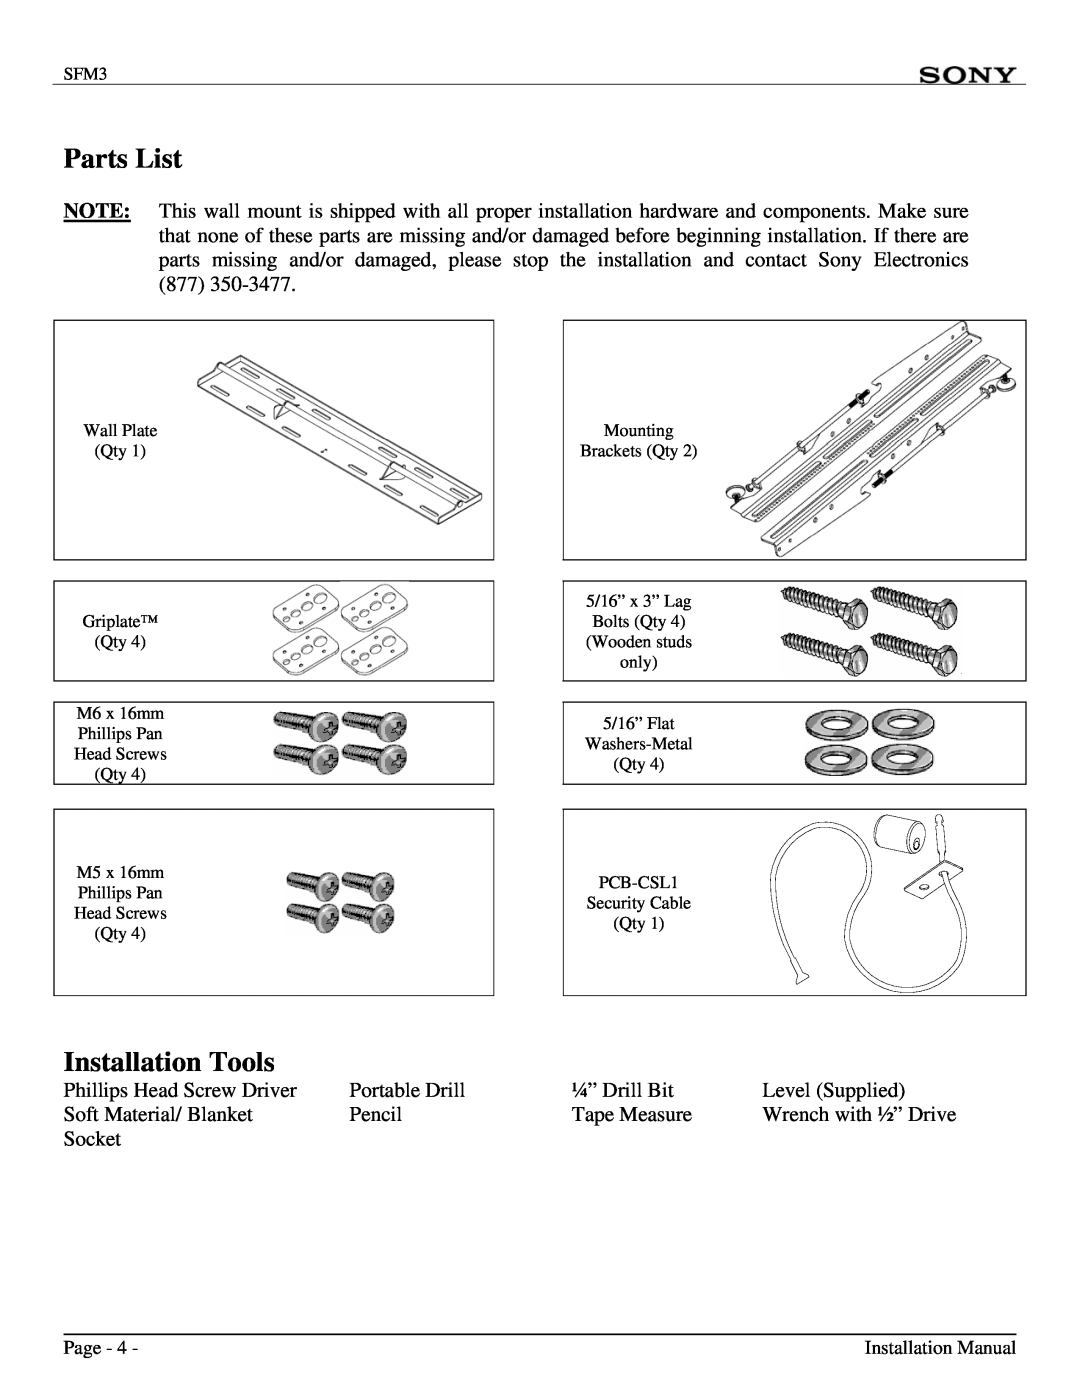 Sony SFM3 installation manual Parts List, Installation Tools 